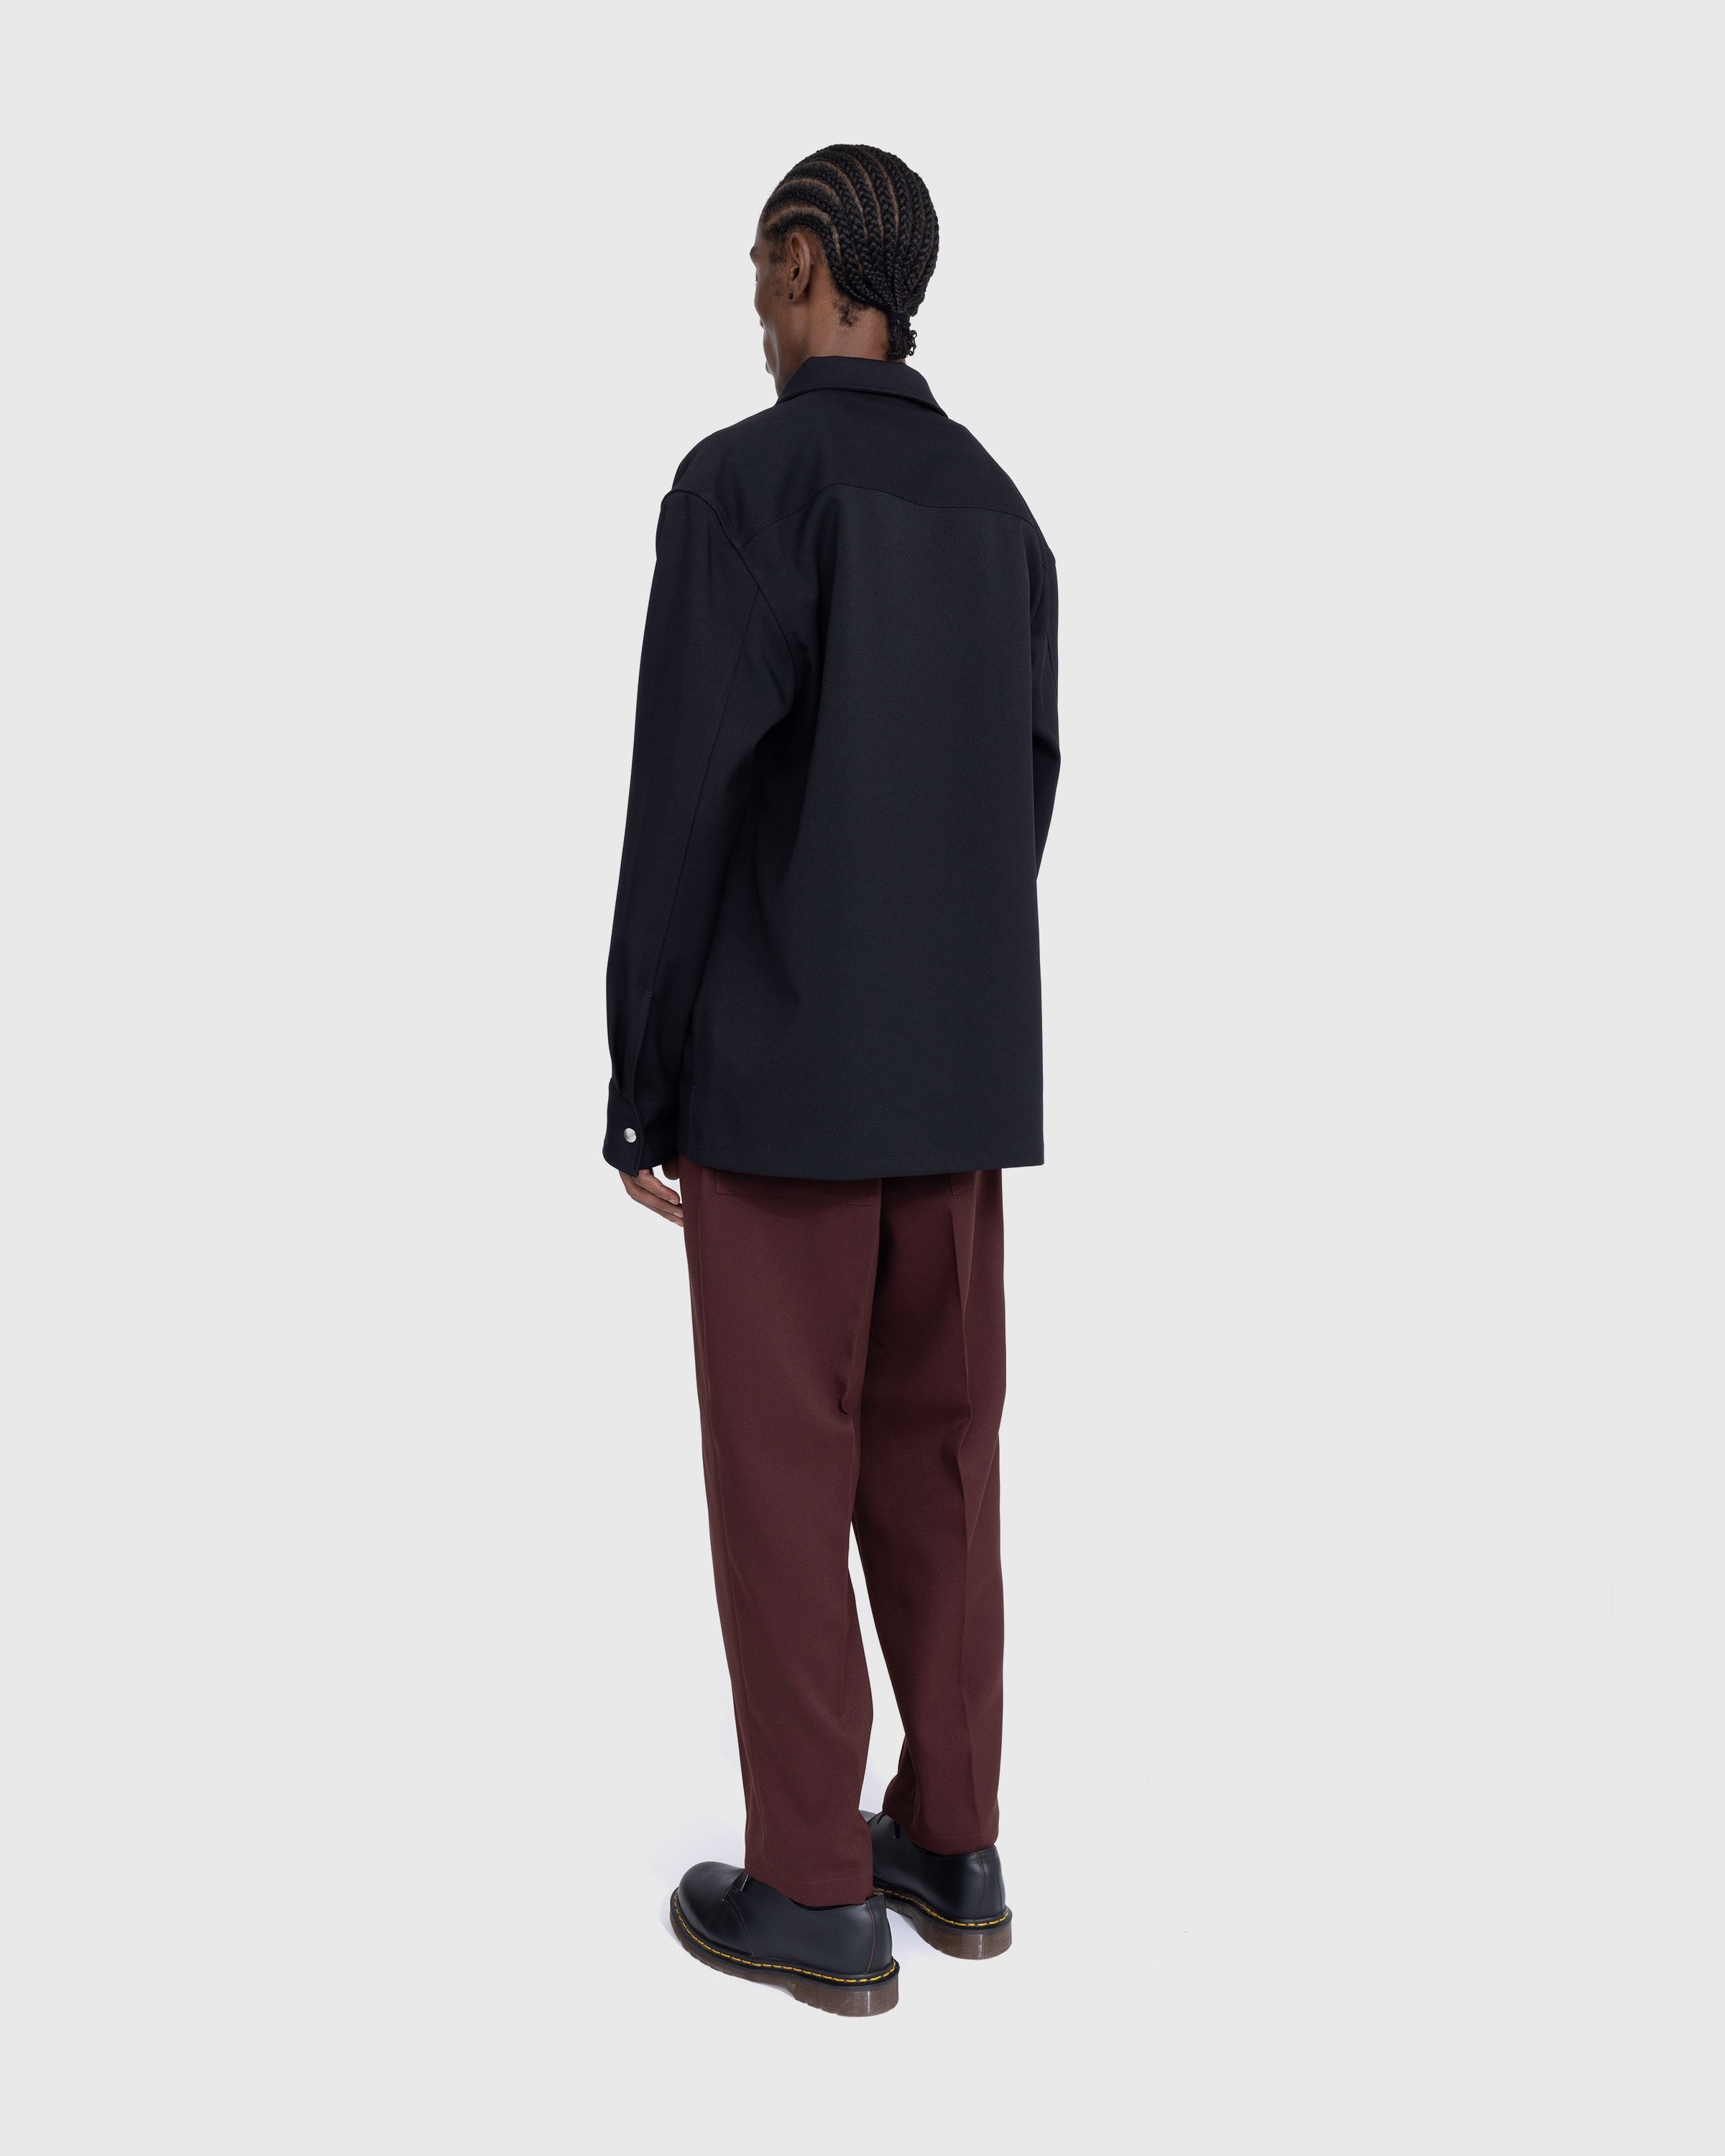 Jil Sander – Trouser D 09 AW 20 Mahogany | Highsnobiety Shop